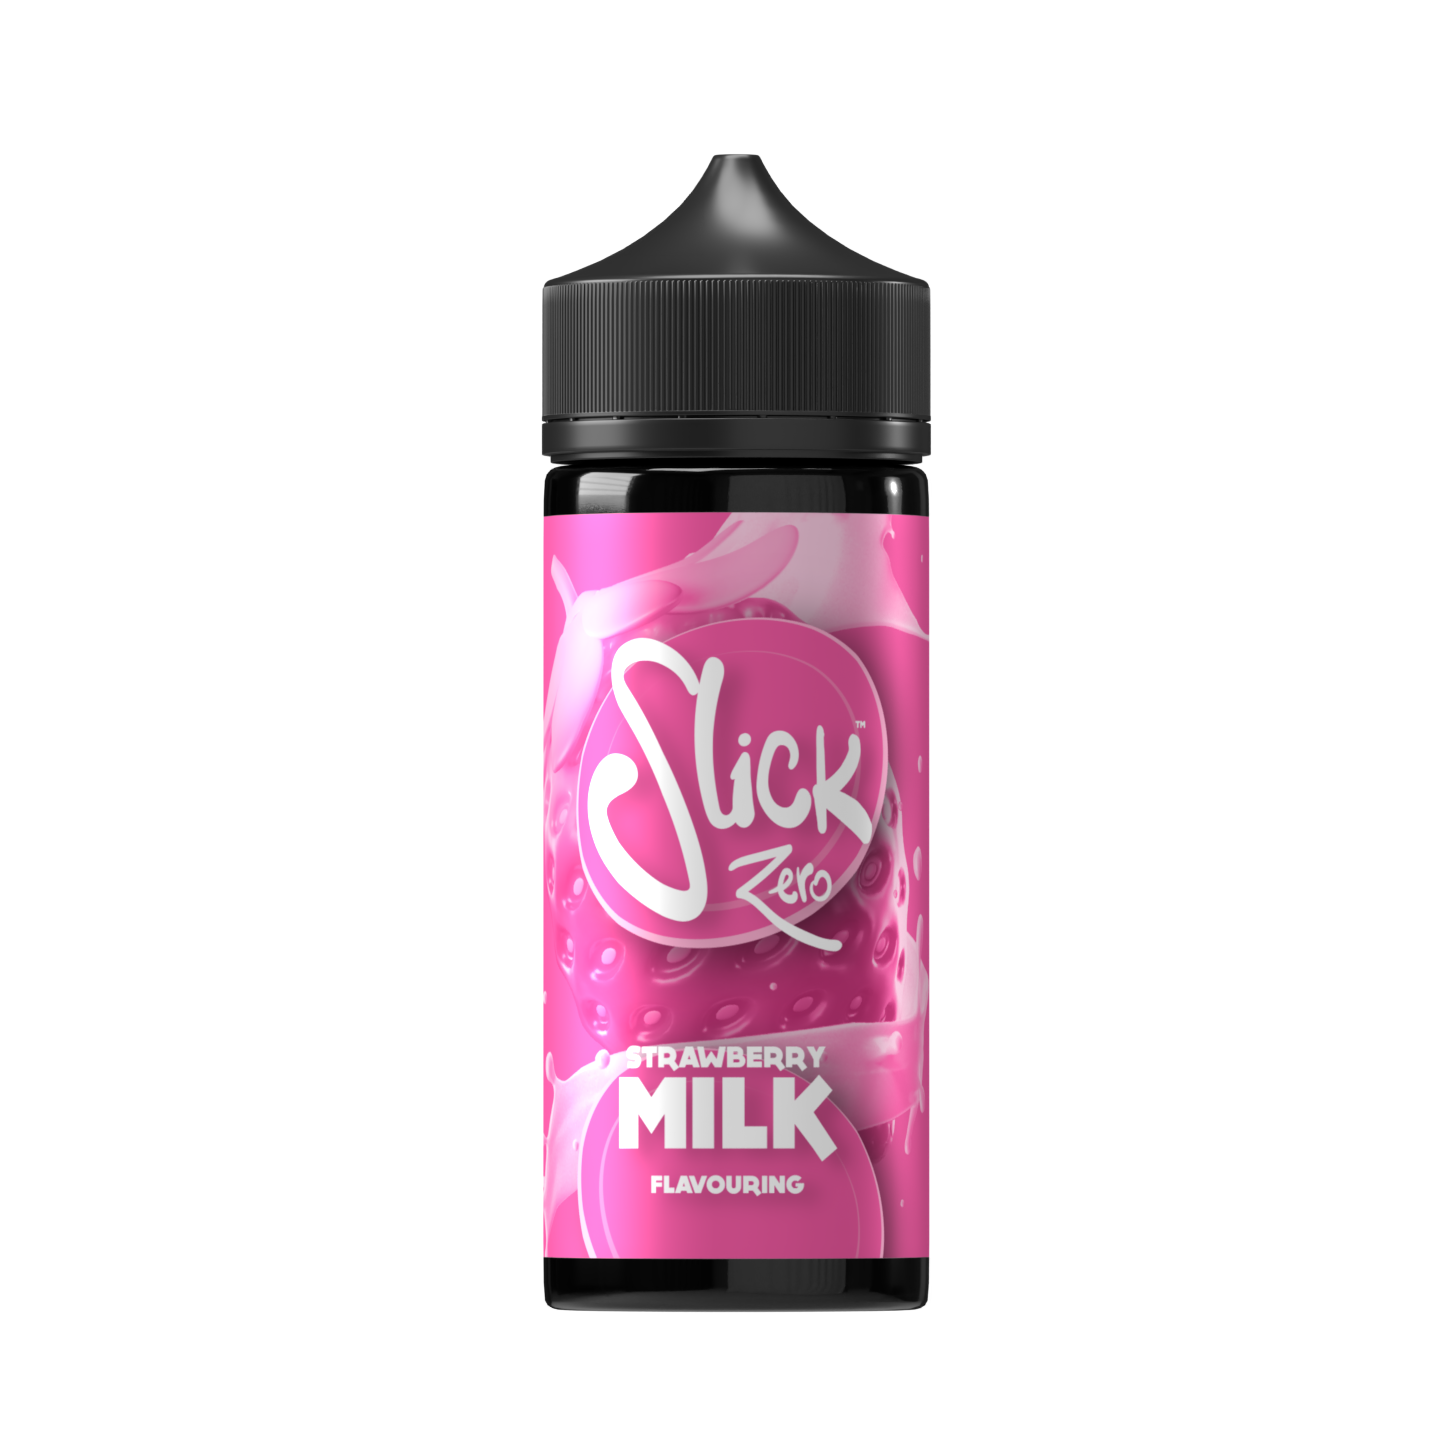 Slick Zero - Strawberry Milk Flavouring